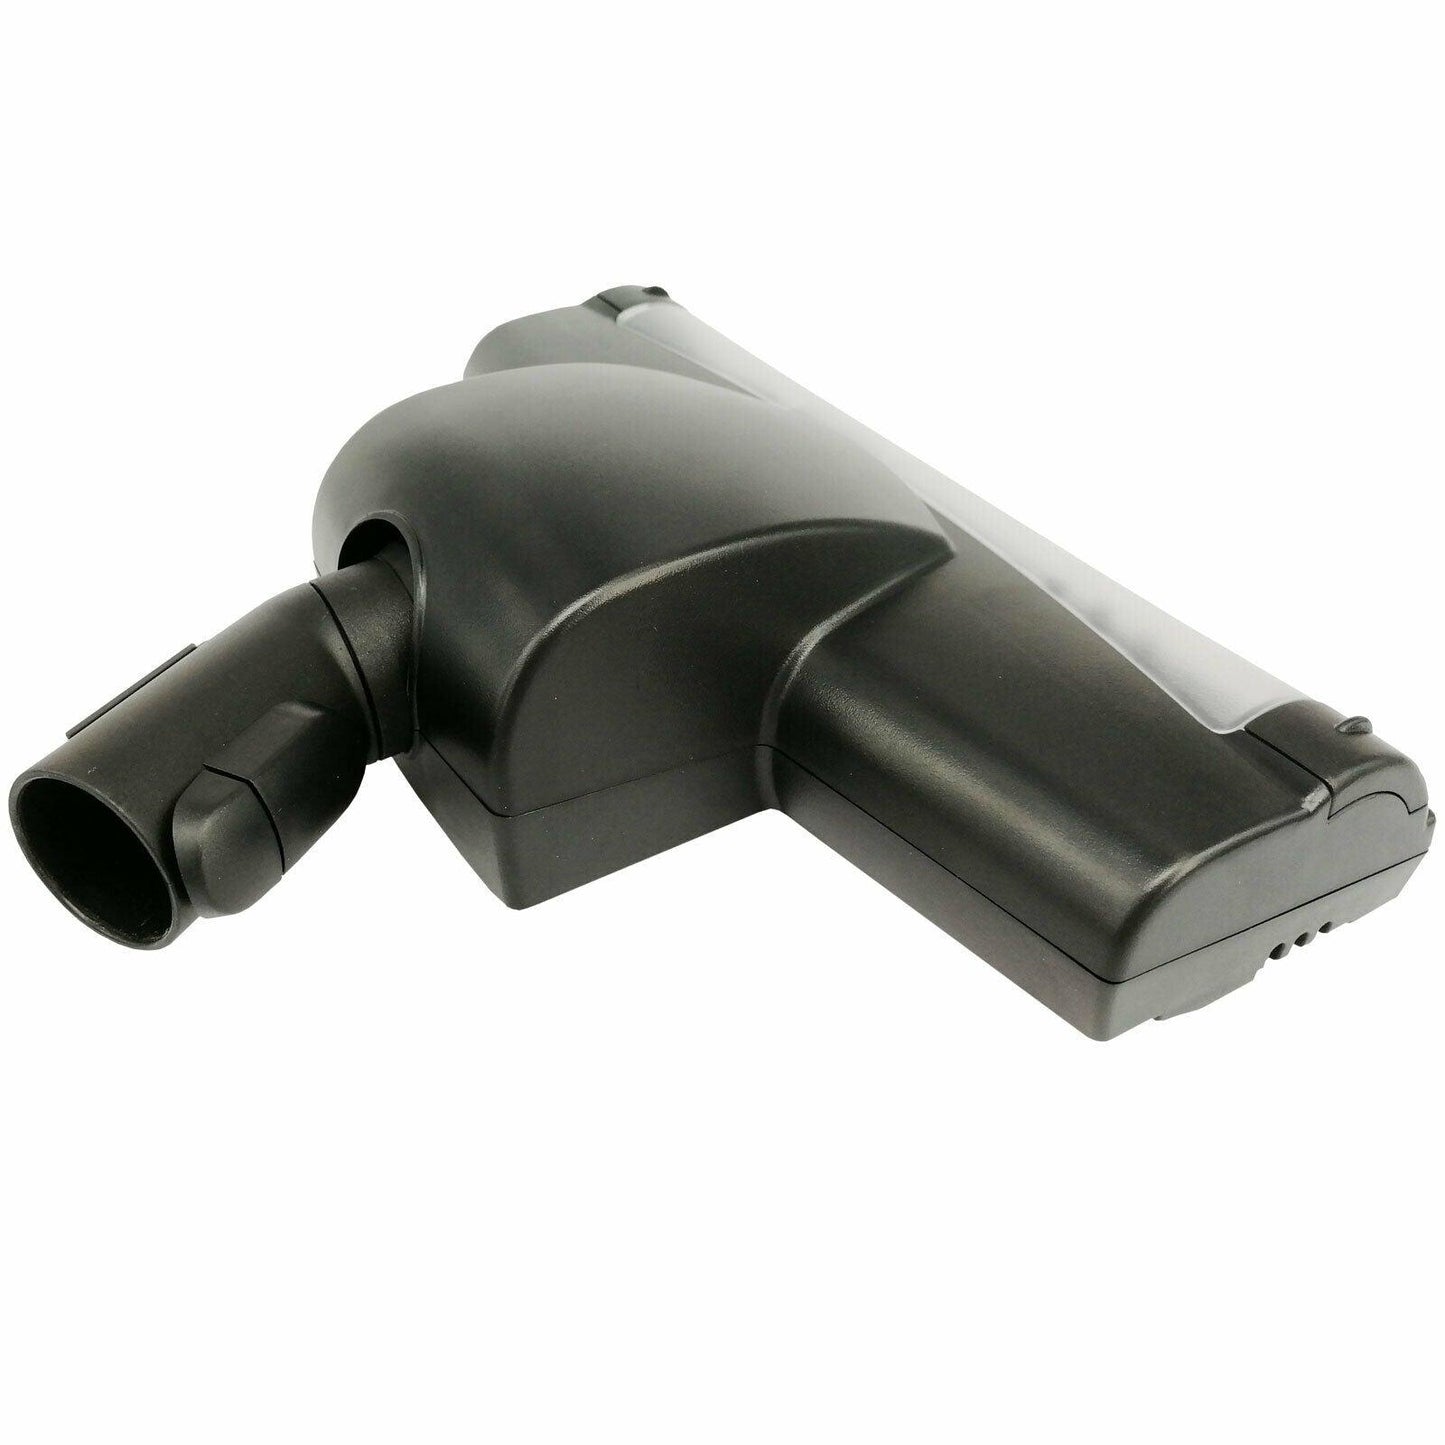 Interlock Turbo Floor Head Nozzle For Miele S8310 S8320 S8330 S8840 S7510 S7580 Sparesbarn